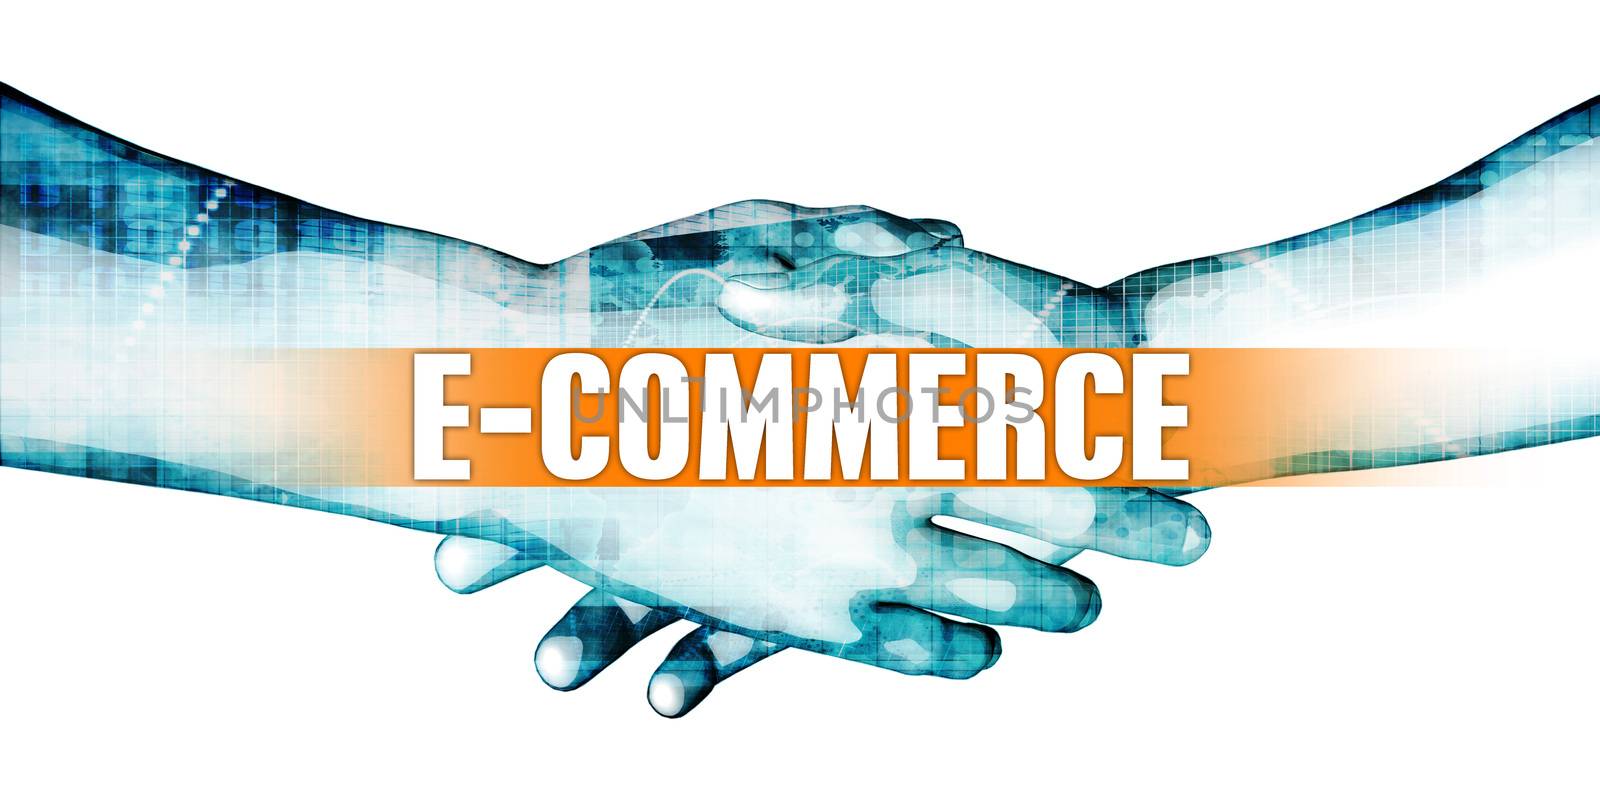 E-commerce by kentoh